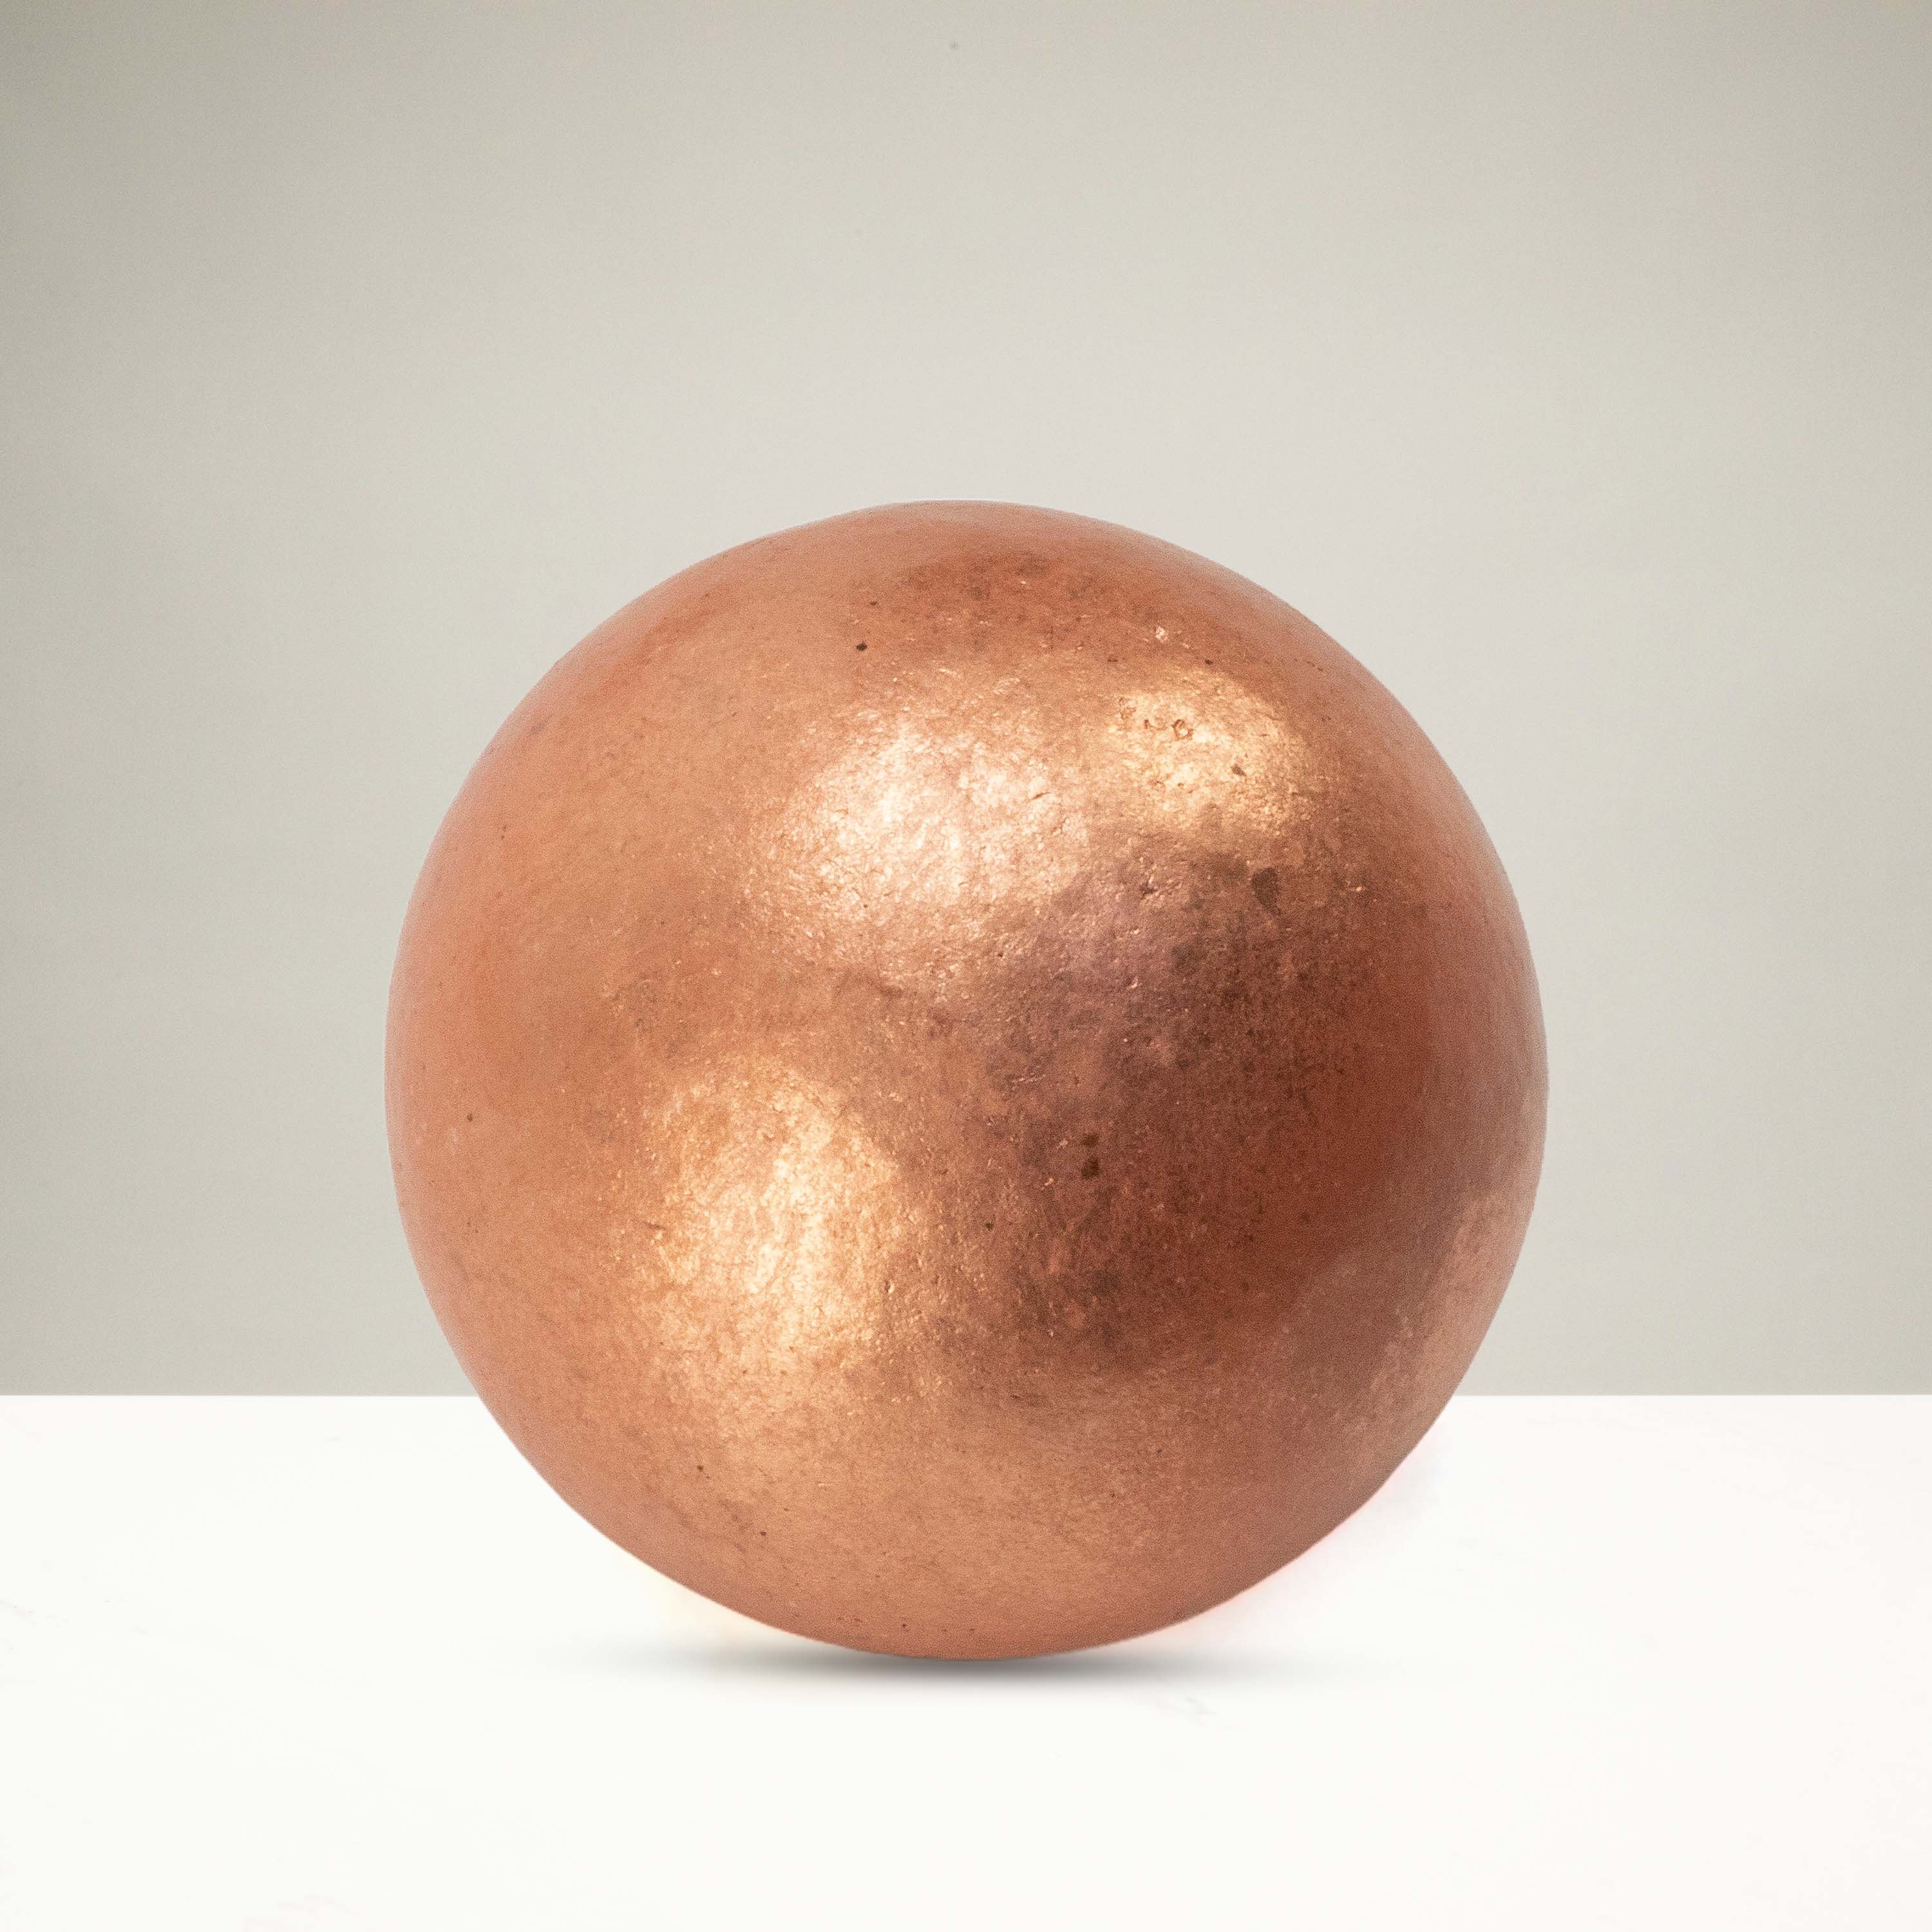 Kalifano Copper Copper Sphere 2" / 575 grams SP240-CPR